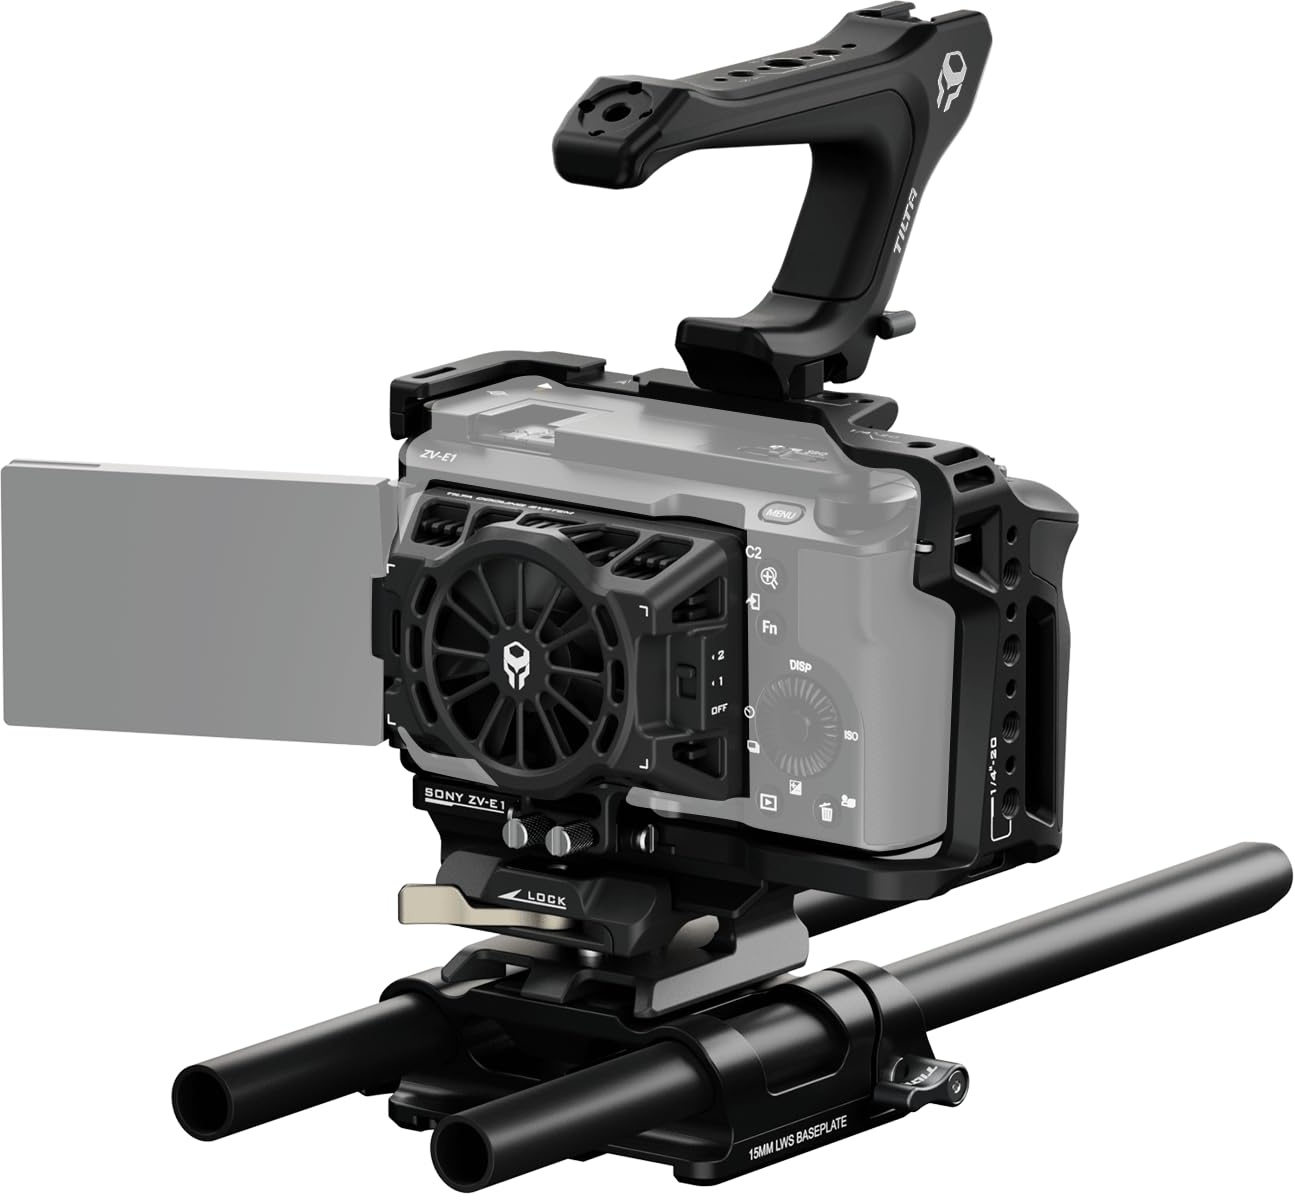 Tilta ZV-E1 Cage, Kompletter Kamerakäfig Kompatibel mit Sony ZV-E1 Pro Kit mit oberem Griff, Kühlsystem, LWS-Grundplatte und NATO-Schiene - Schwarz TA-T35-C-B